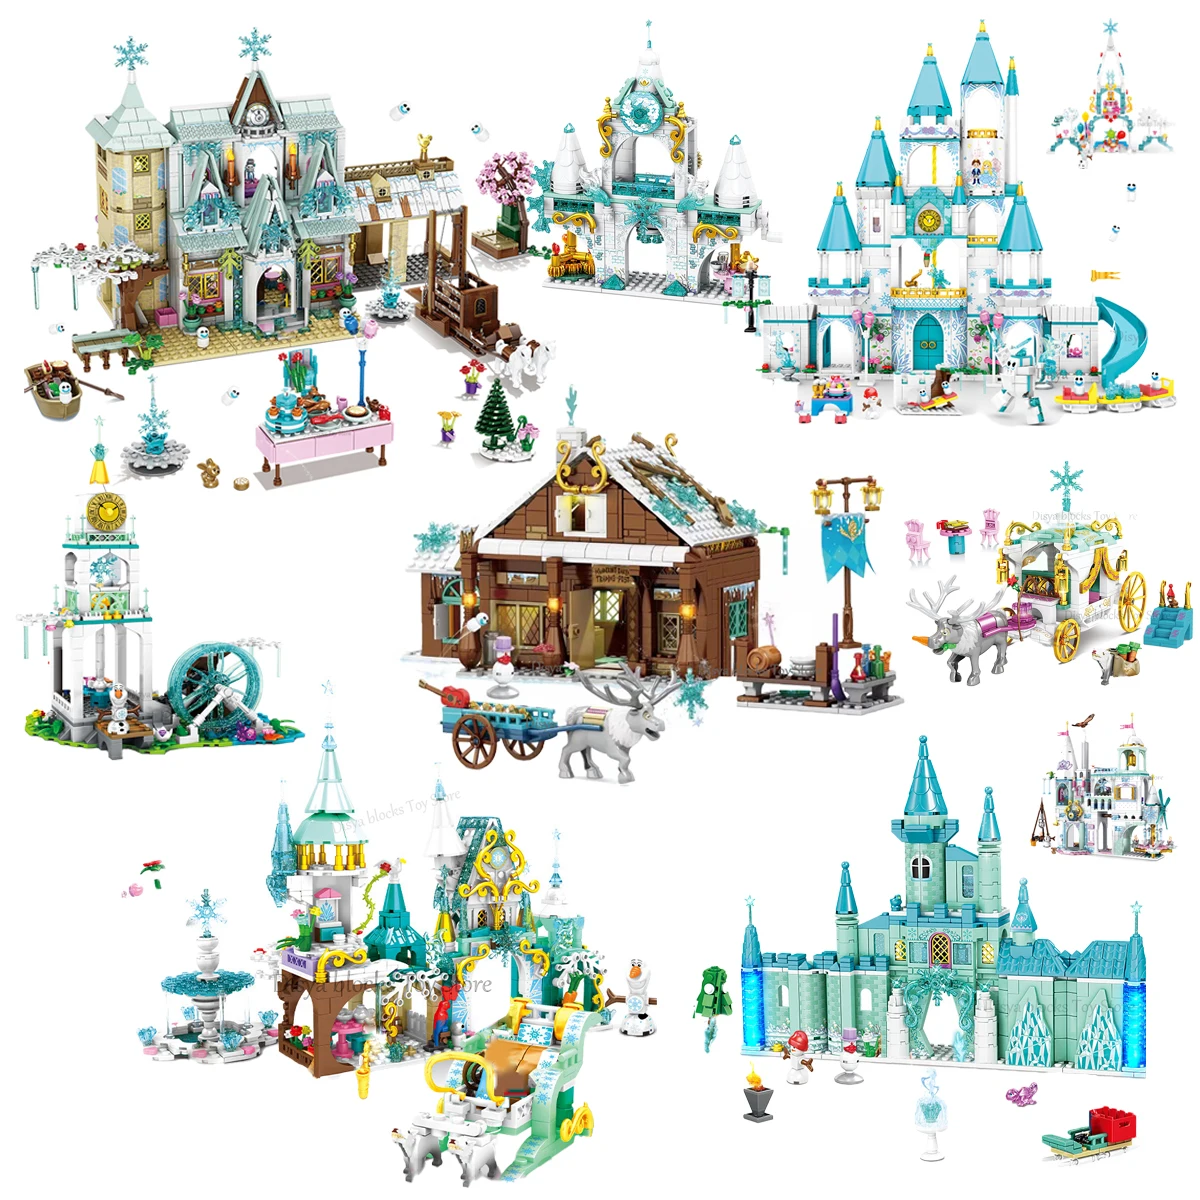 Disney Frozen Dream Princess Elsa Ice Castle Dream Anna Building Block Model Set children toy Birthday girl toy gift